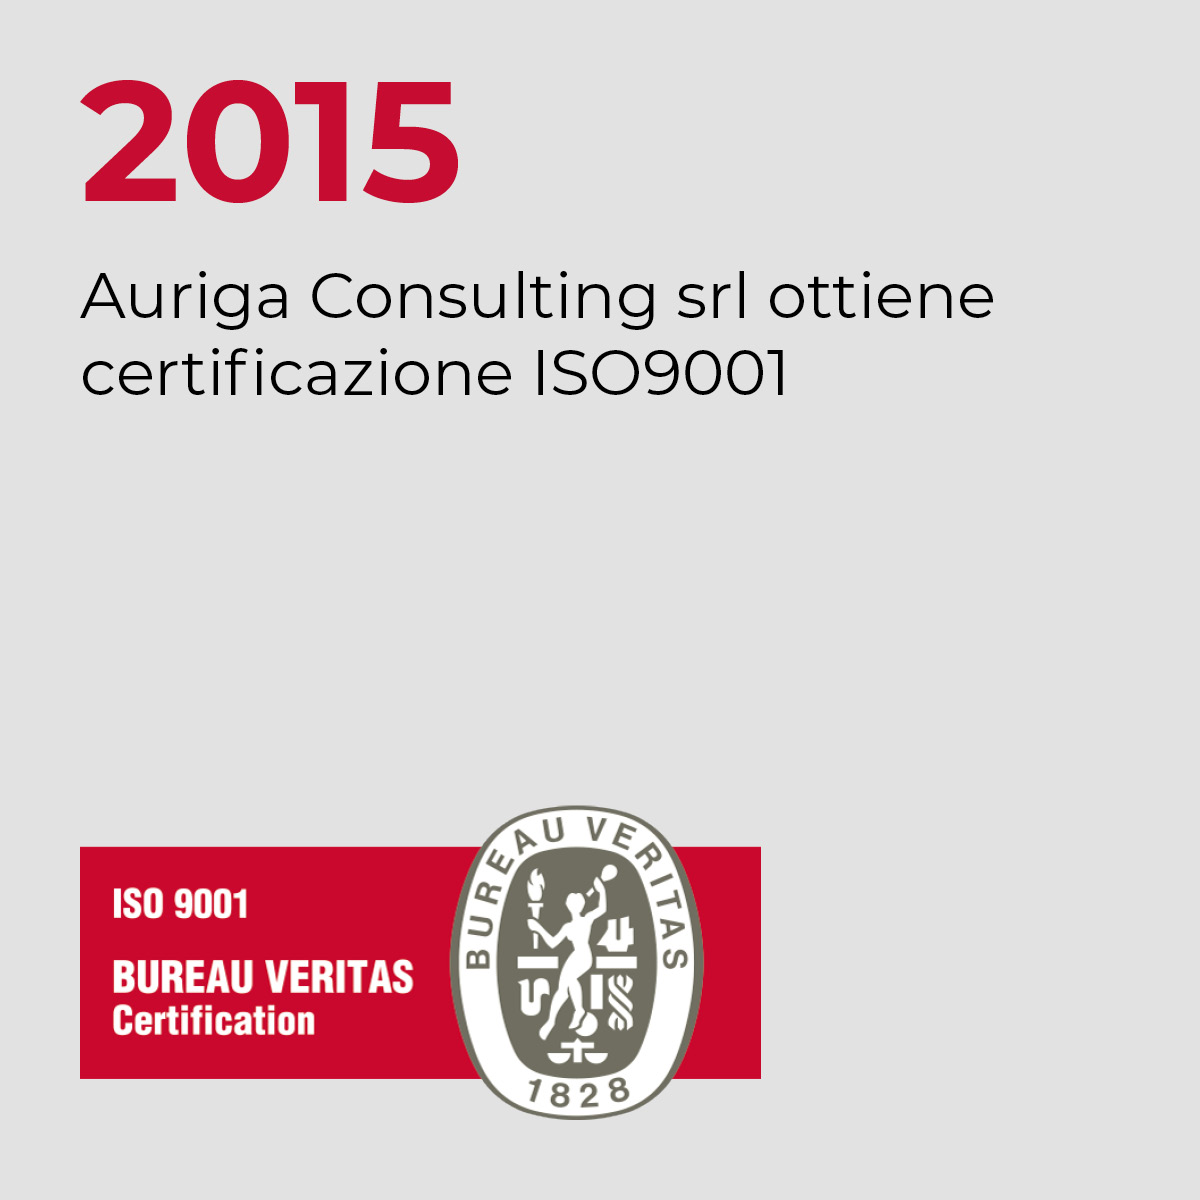 2015, Auriga Consulting srl ottiene certificazione ISO9001